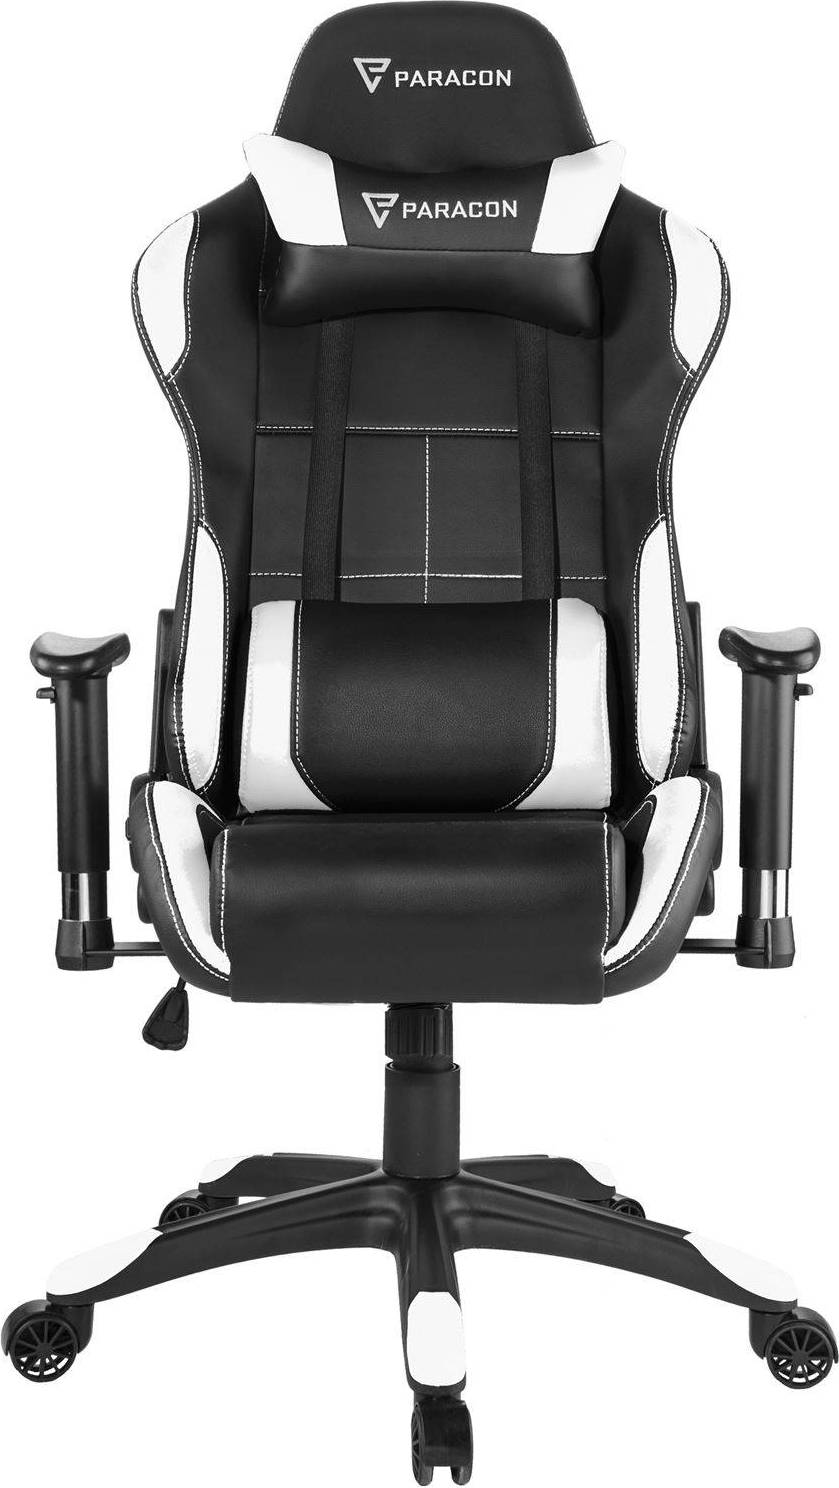  Bild på Paracon Rogue Gaming Chair - Black/White gamingstol